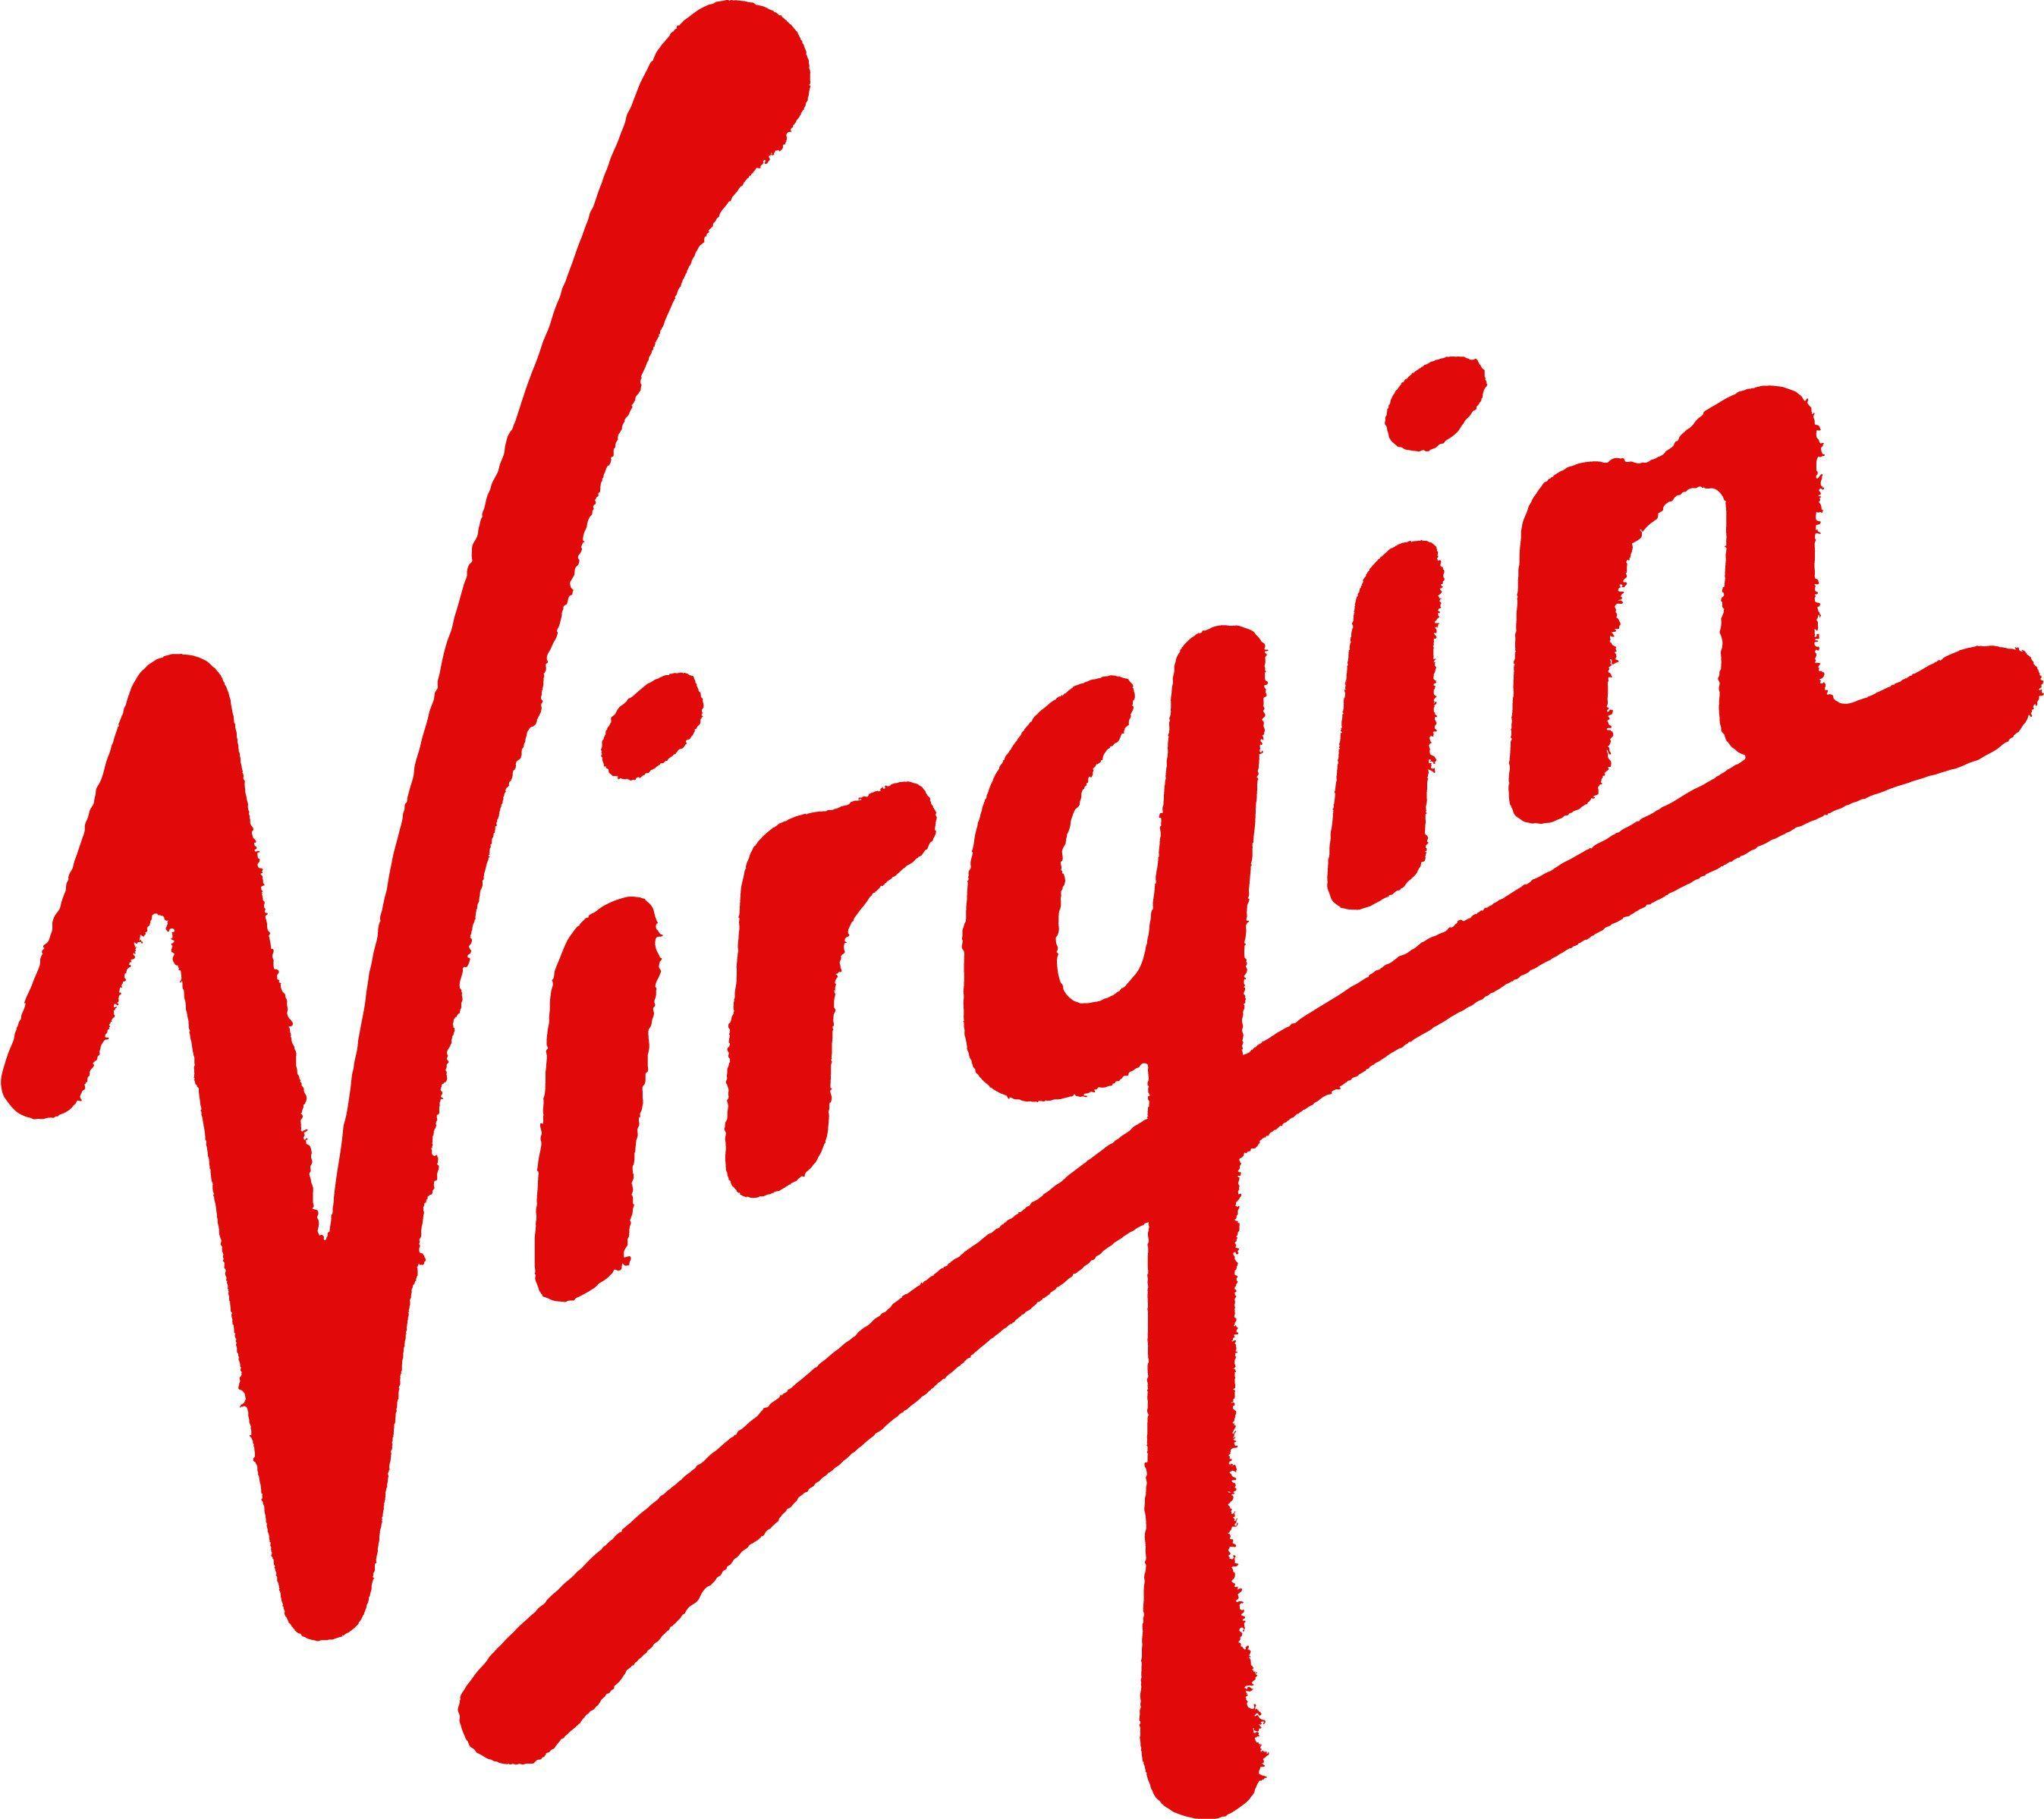 Red Calligraphy Logo - The evolution of the Virgin logo | Virgin